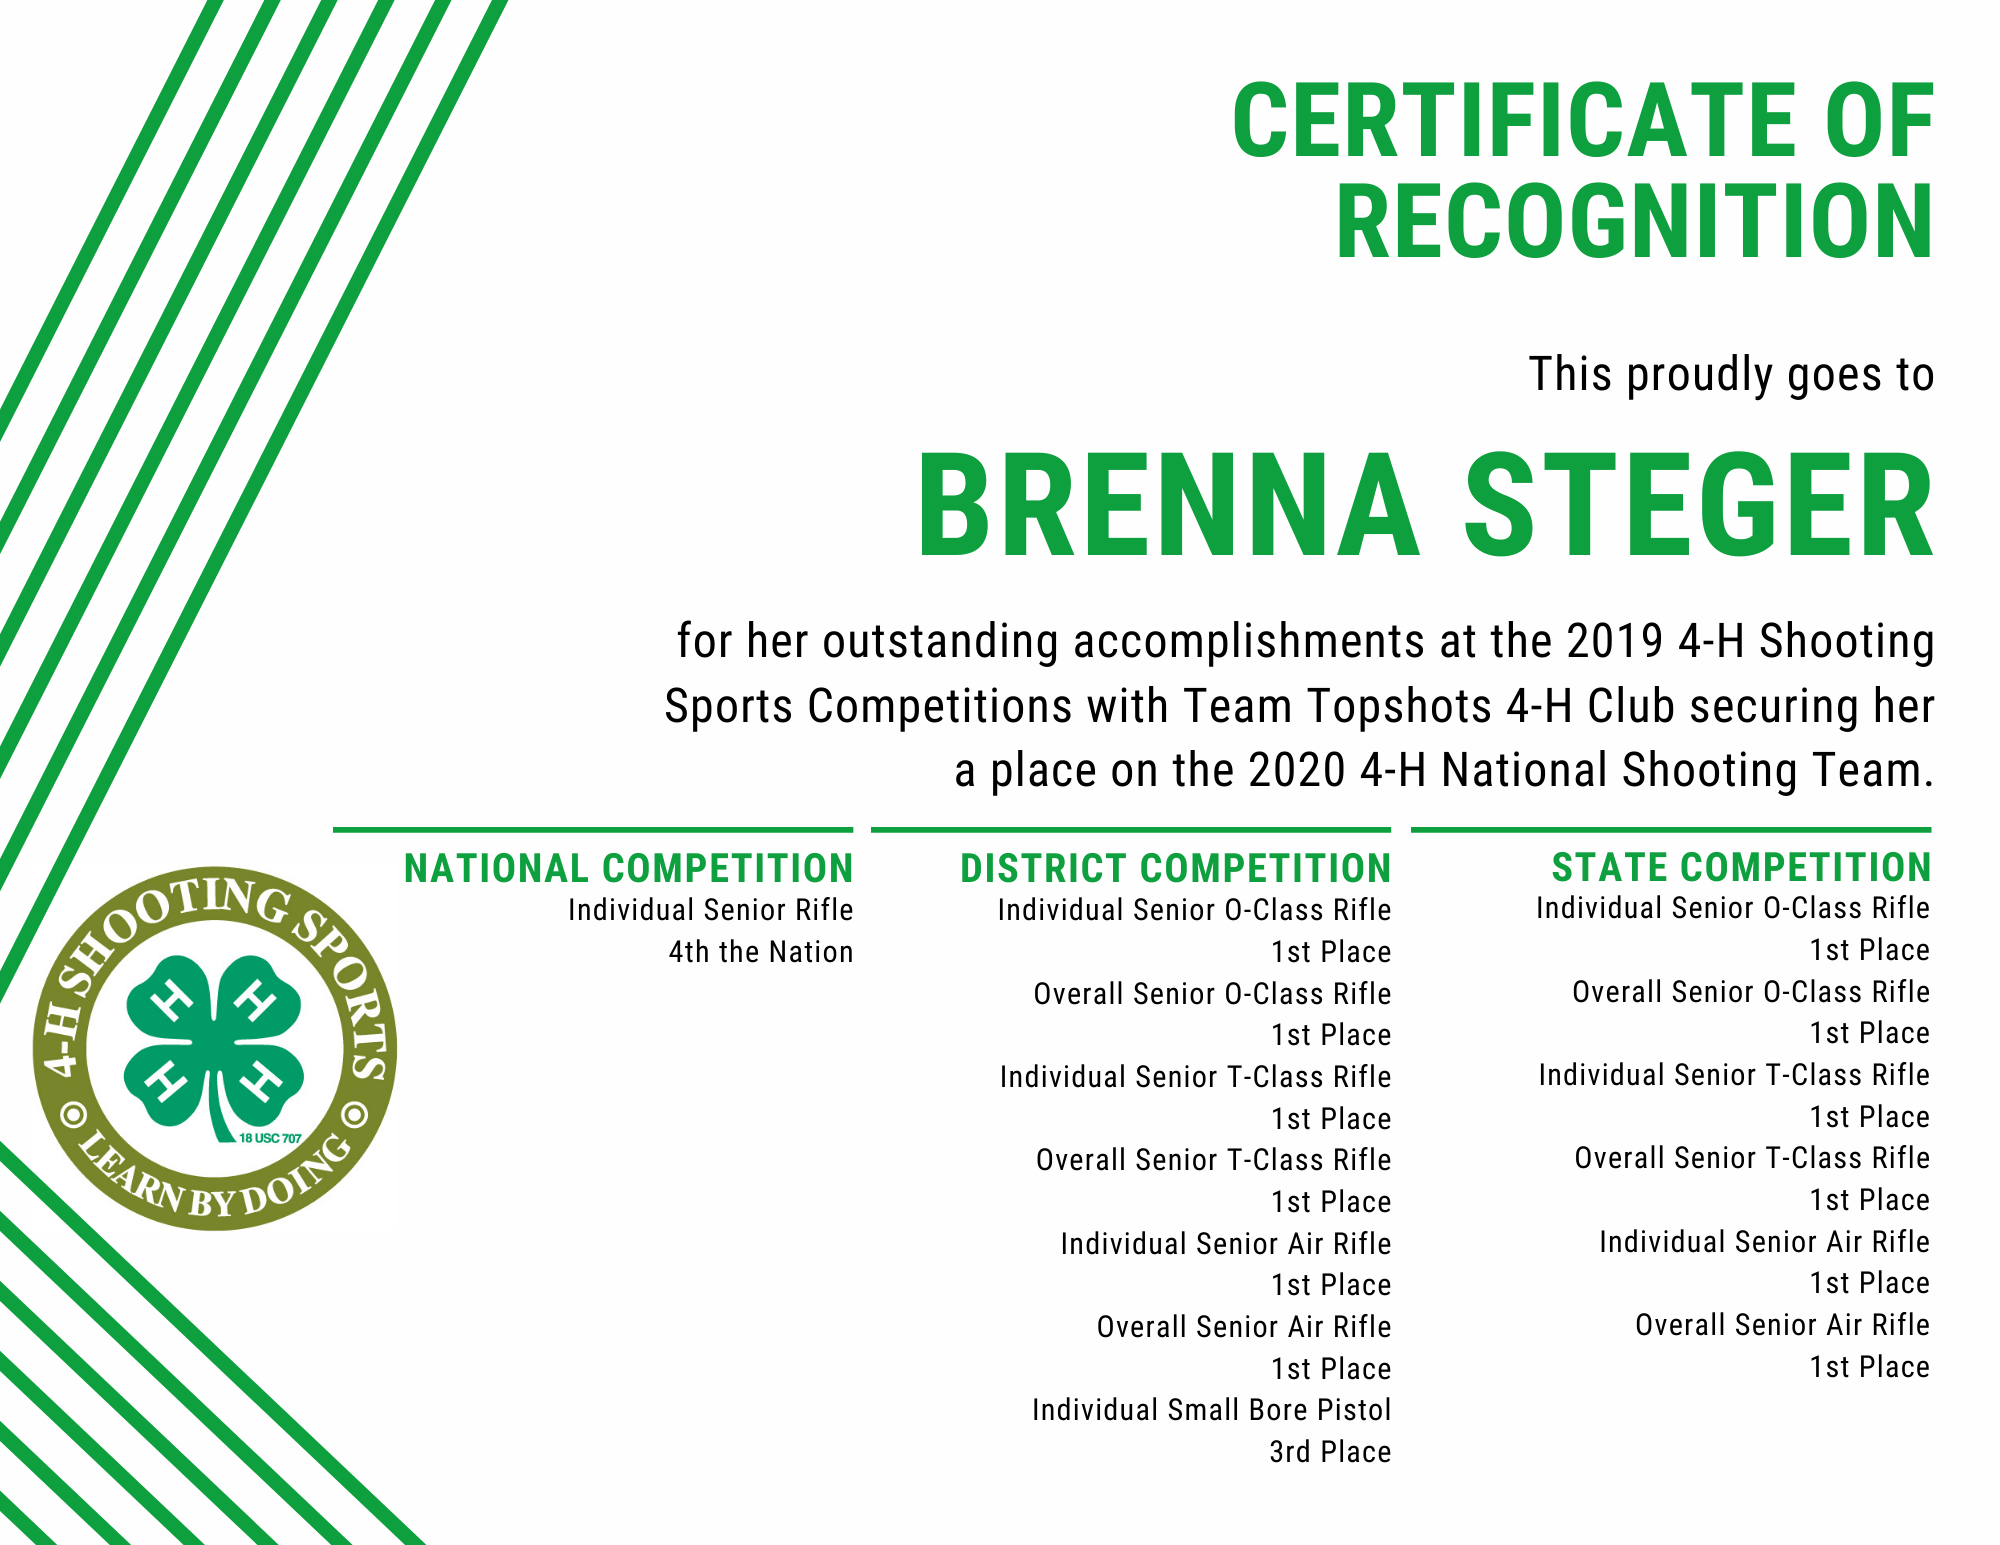 A list of Brenna's accomplishments